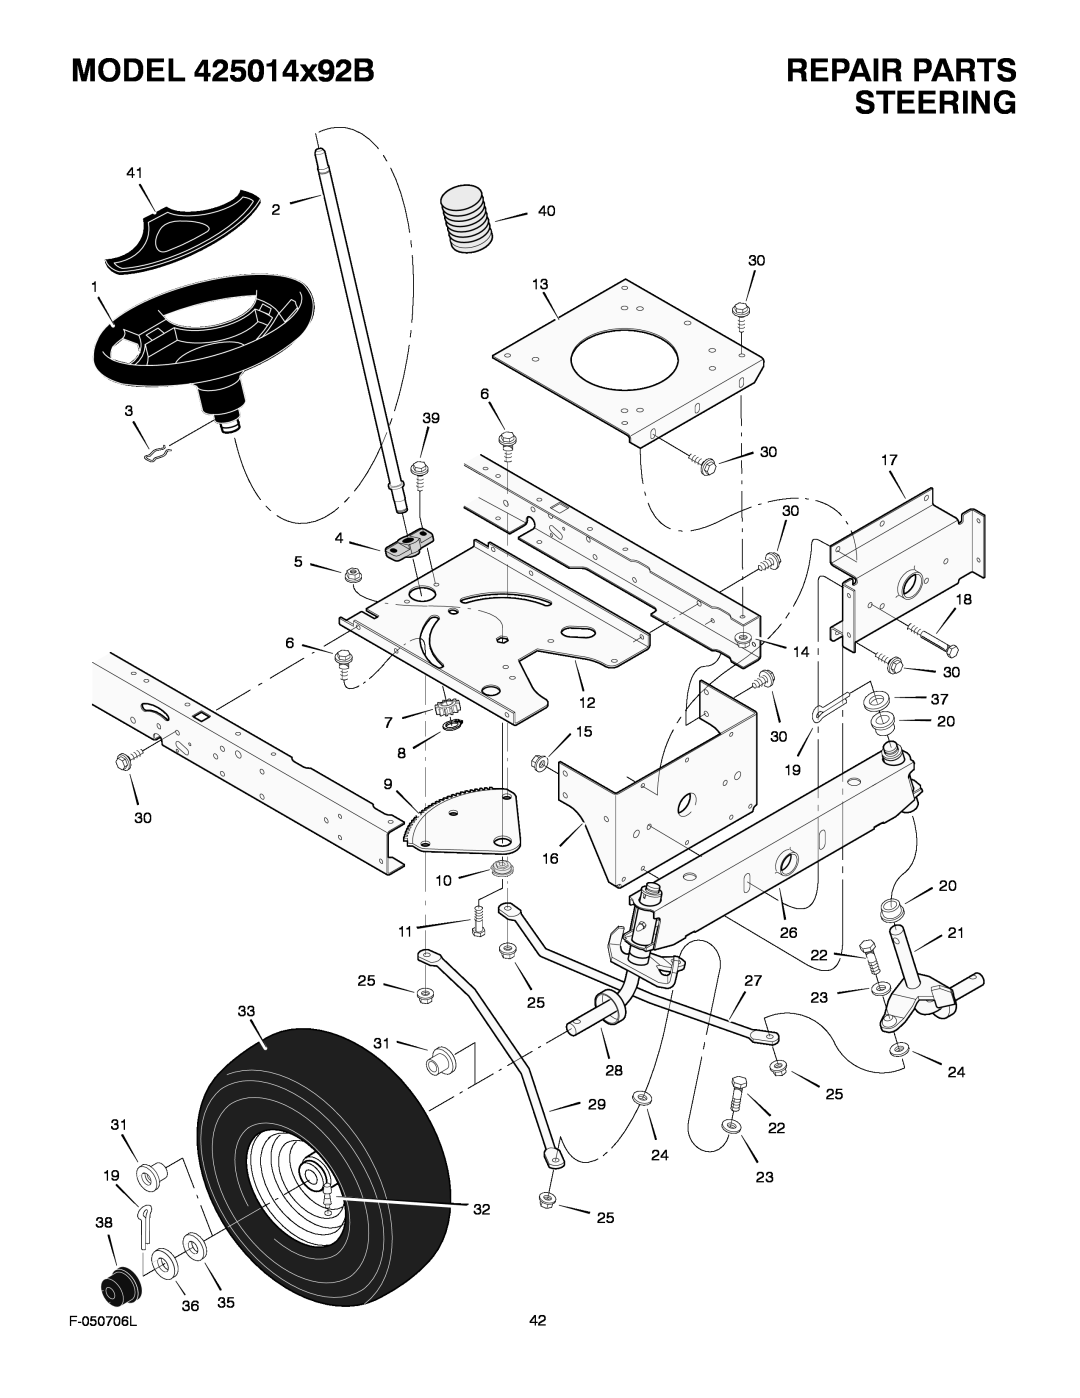 Murray manual Repair Parts Steering, MODEL 425014x92B, F-050706L 